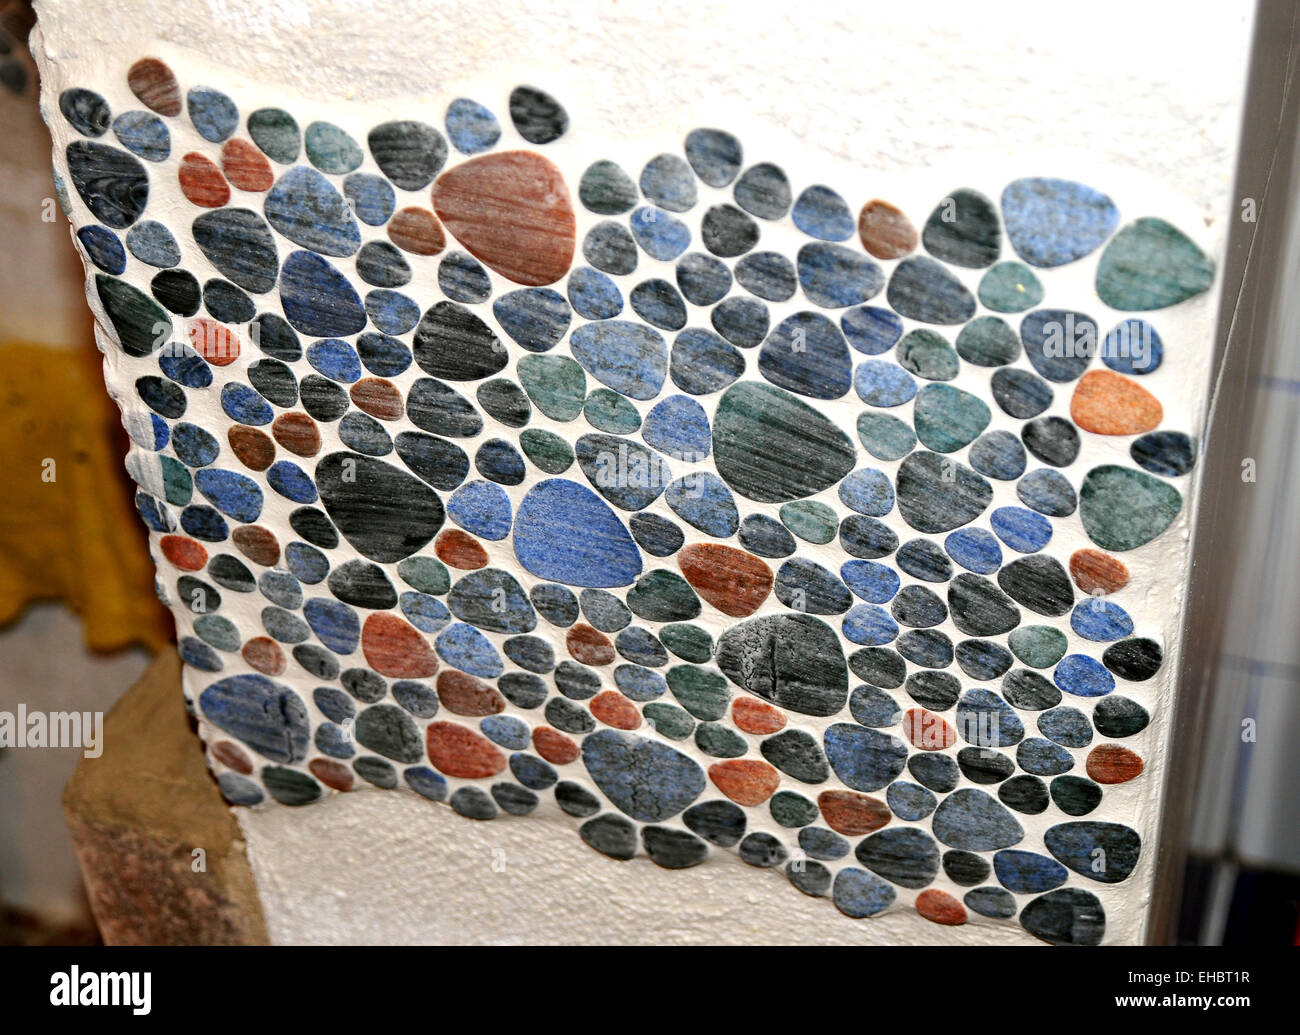 Grouting tile mosaic Stock Photo